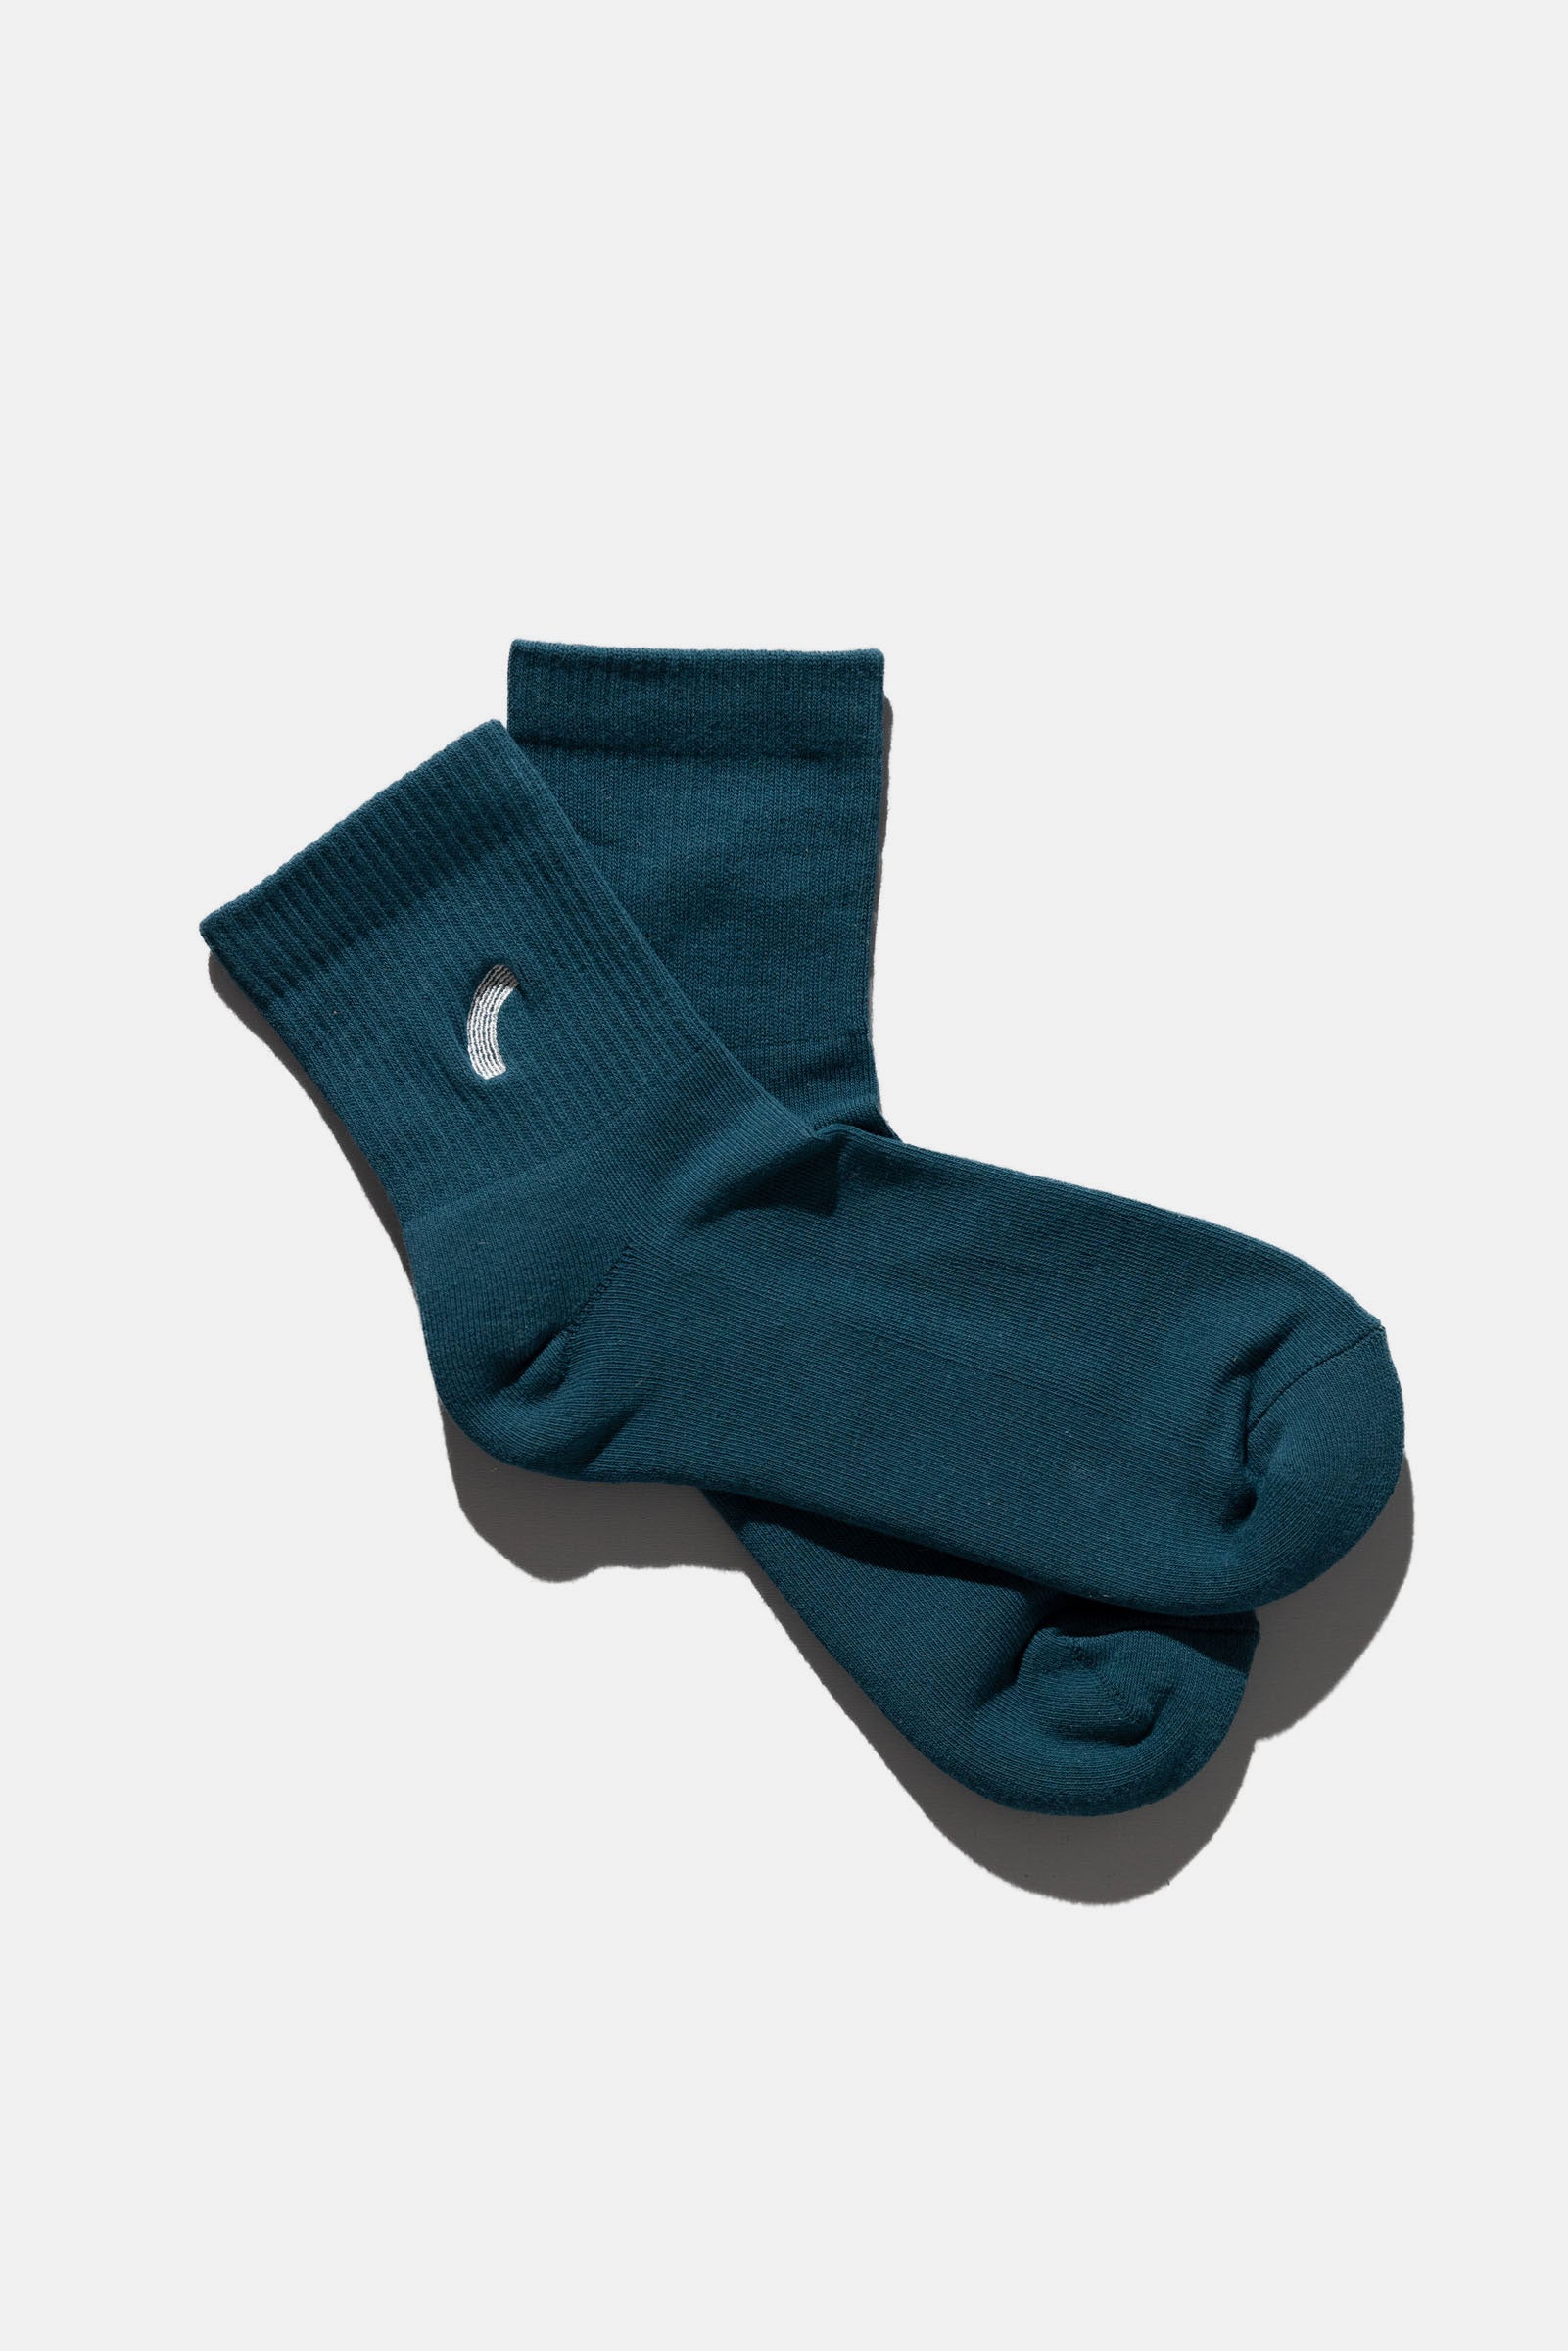 green blue socks